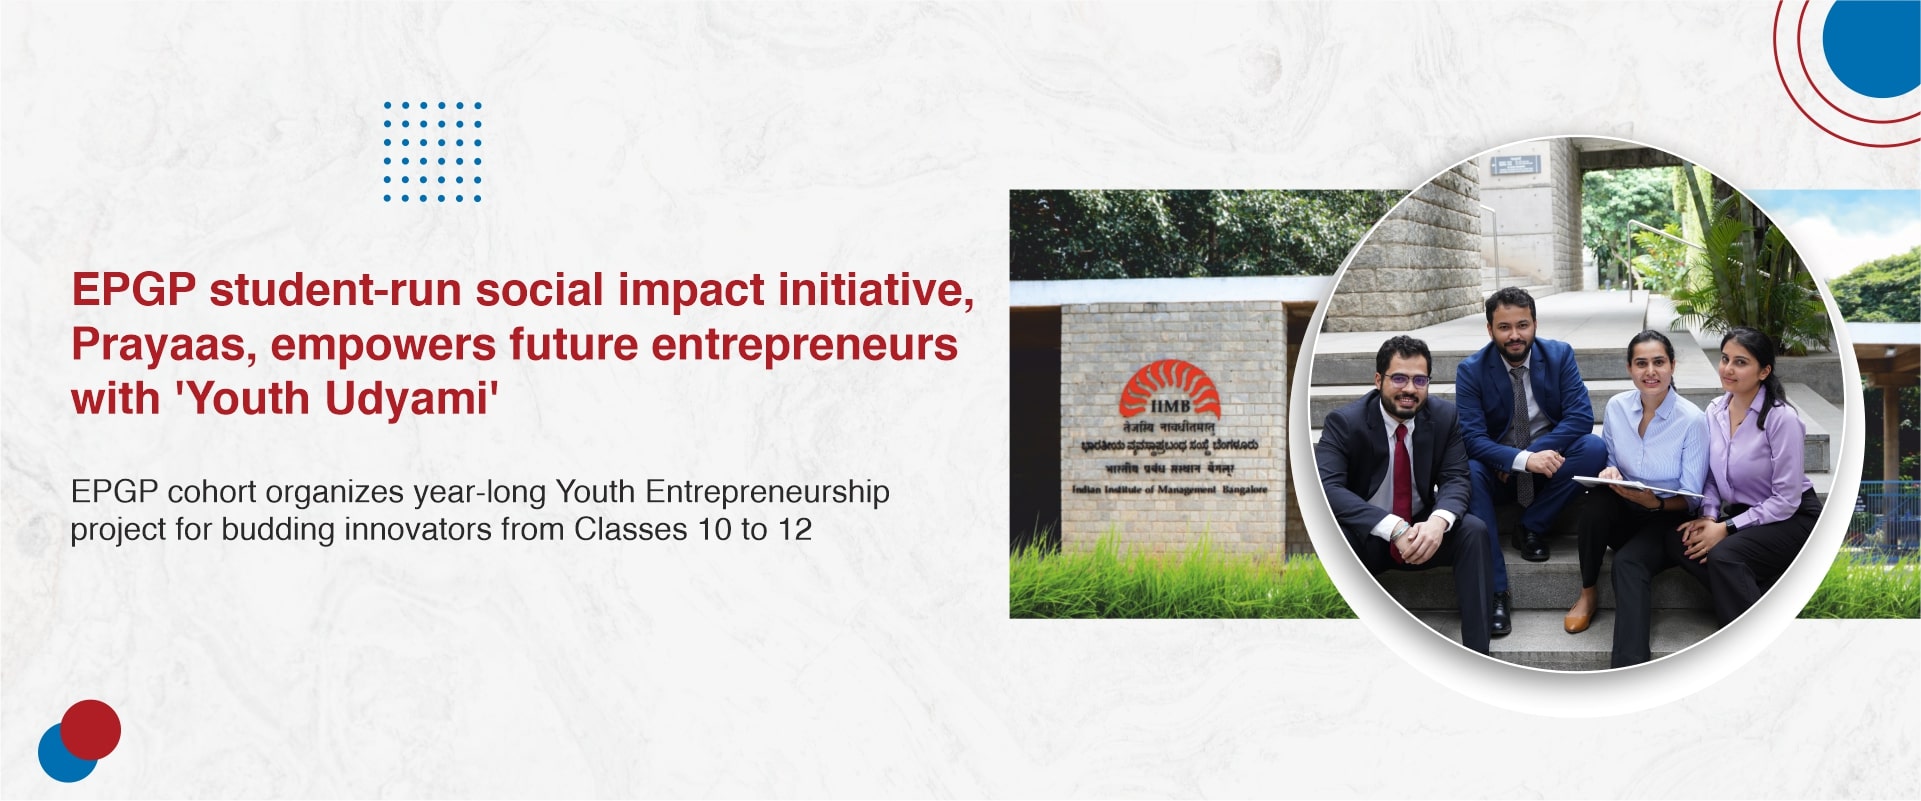  EPGP student-run social impact initiative, Prayaas, empowers future entrepreneurs with ‘Youth Udyami’ 